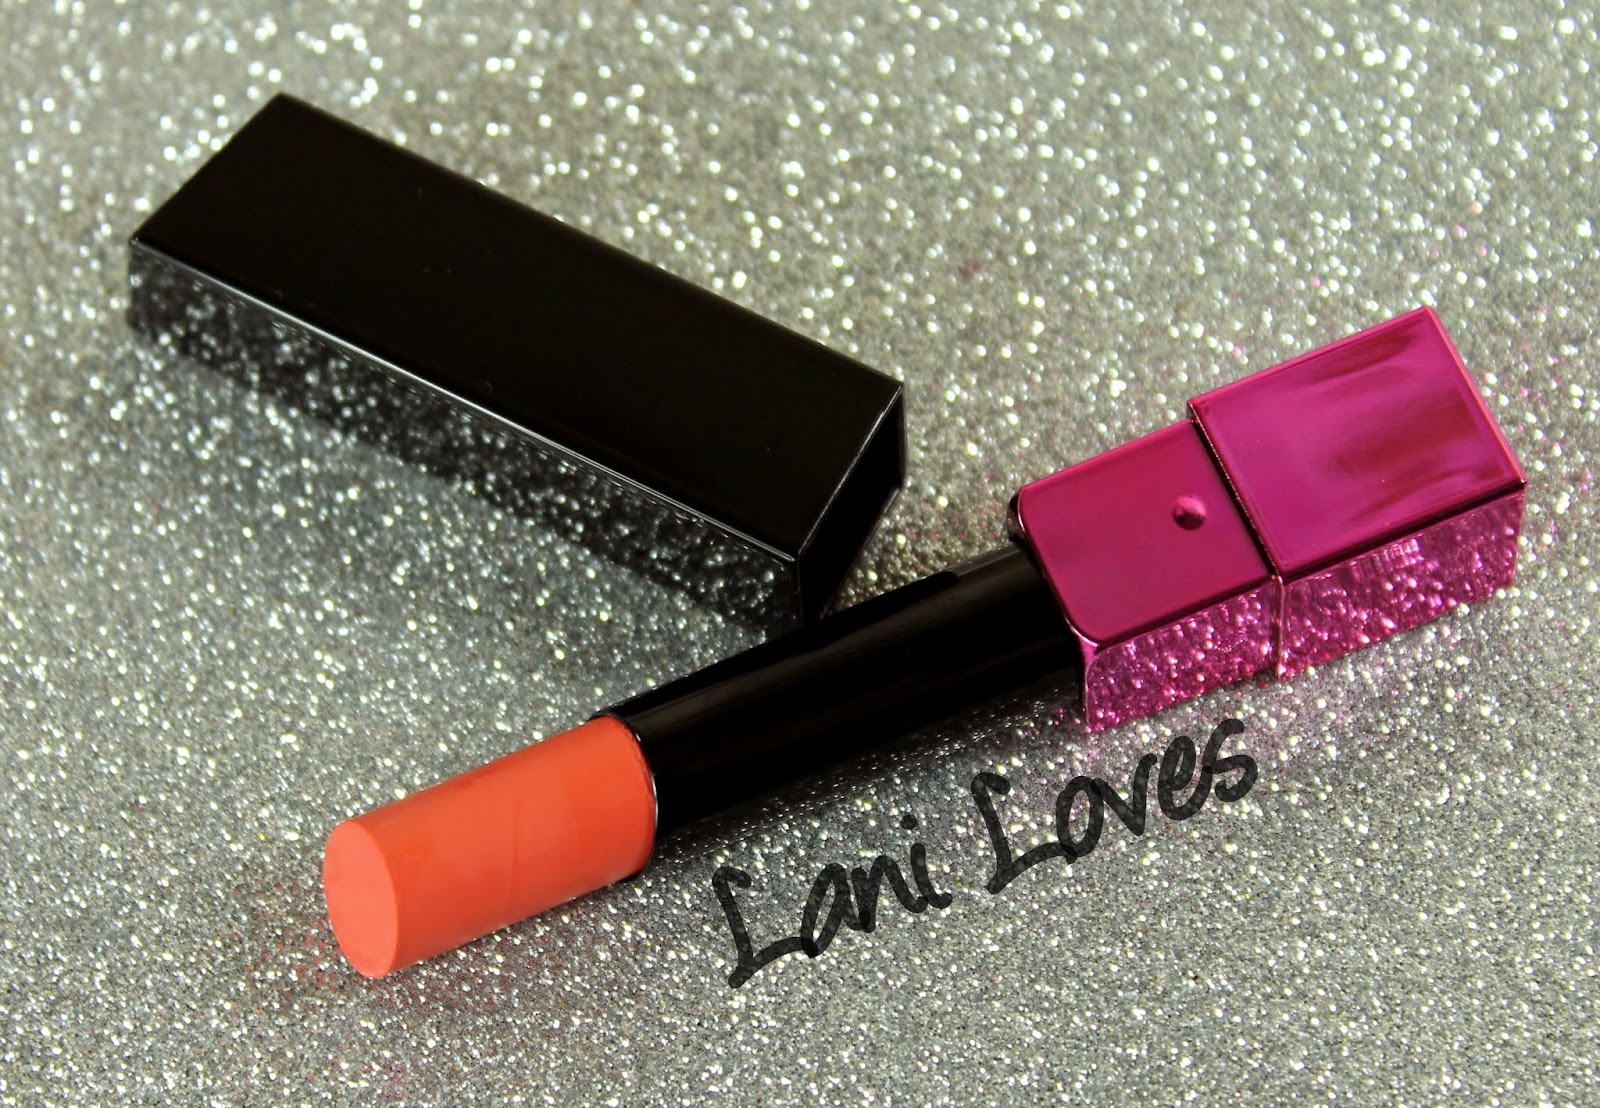 ZA Vibrant Moist Lipstick - OR222 swatches & review